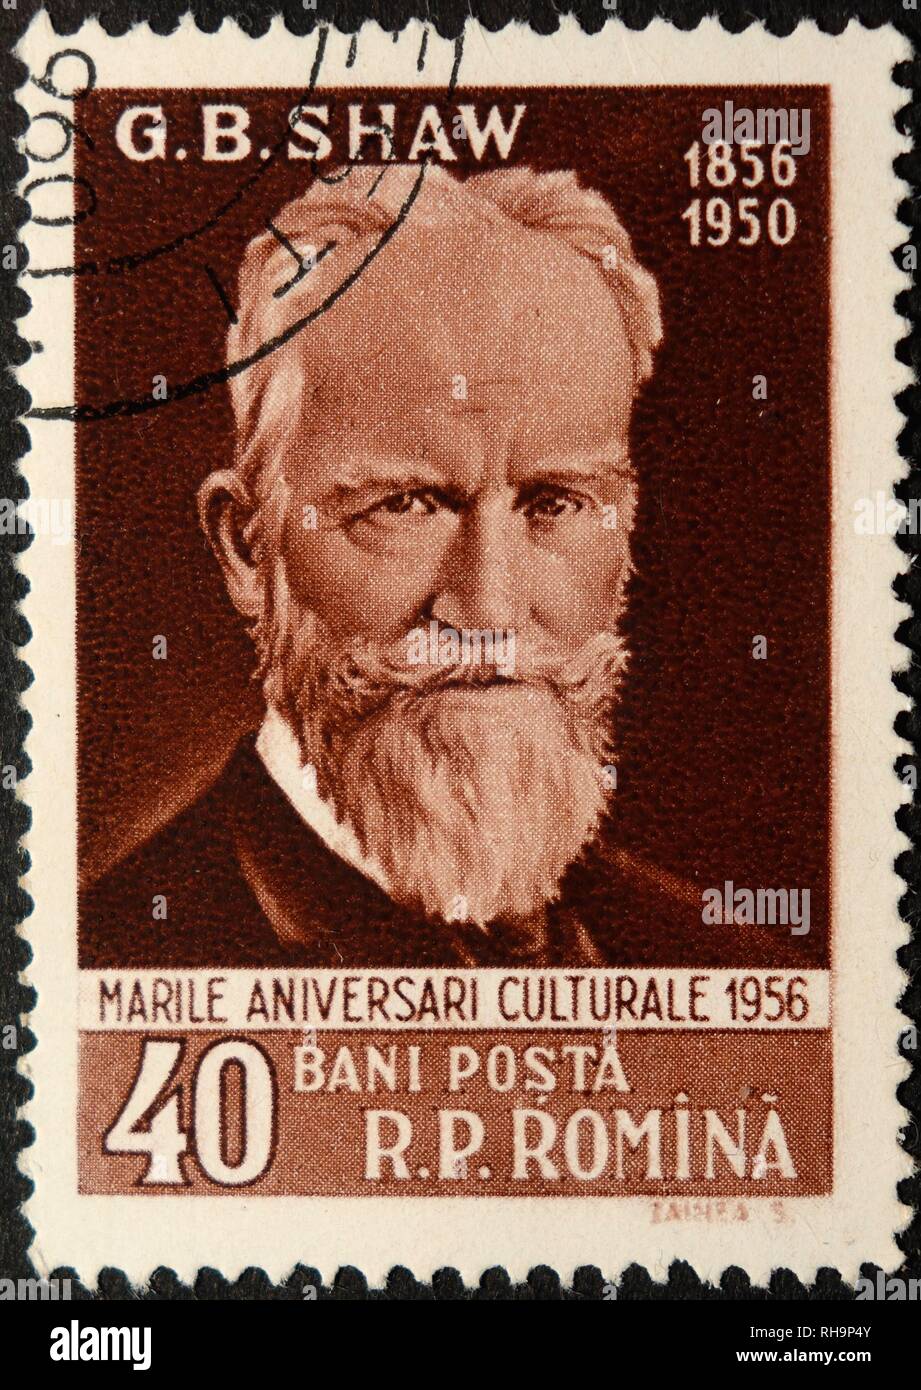 George Bernard Shaw, an Irish playwright, critic, polemicist and political activist. portrait on a Romanian stamp, Romania Stock Photo